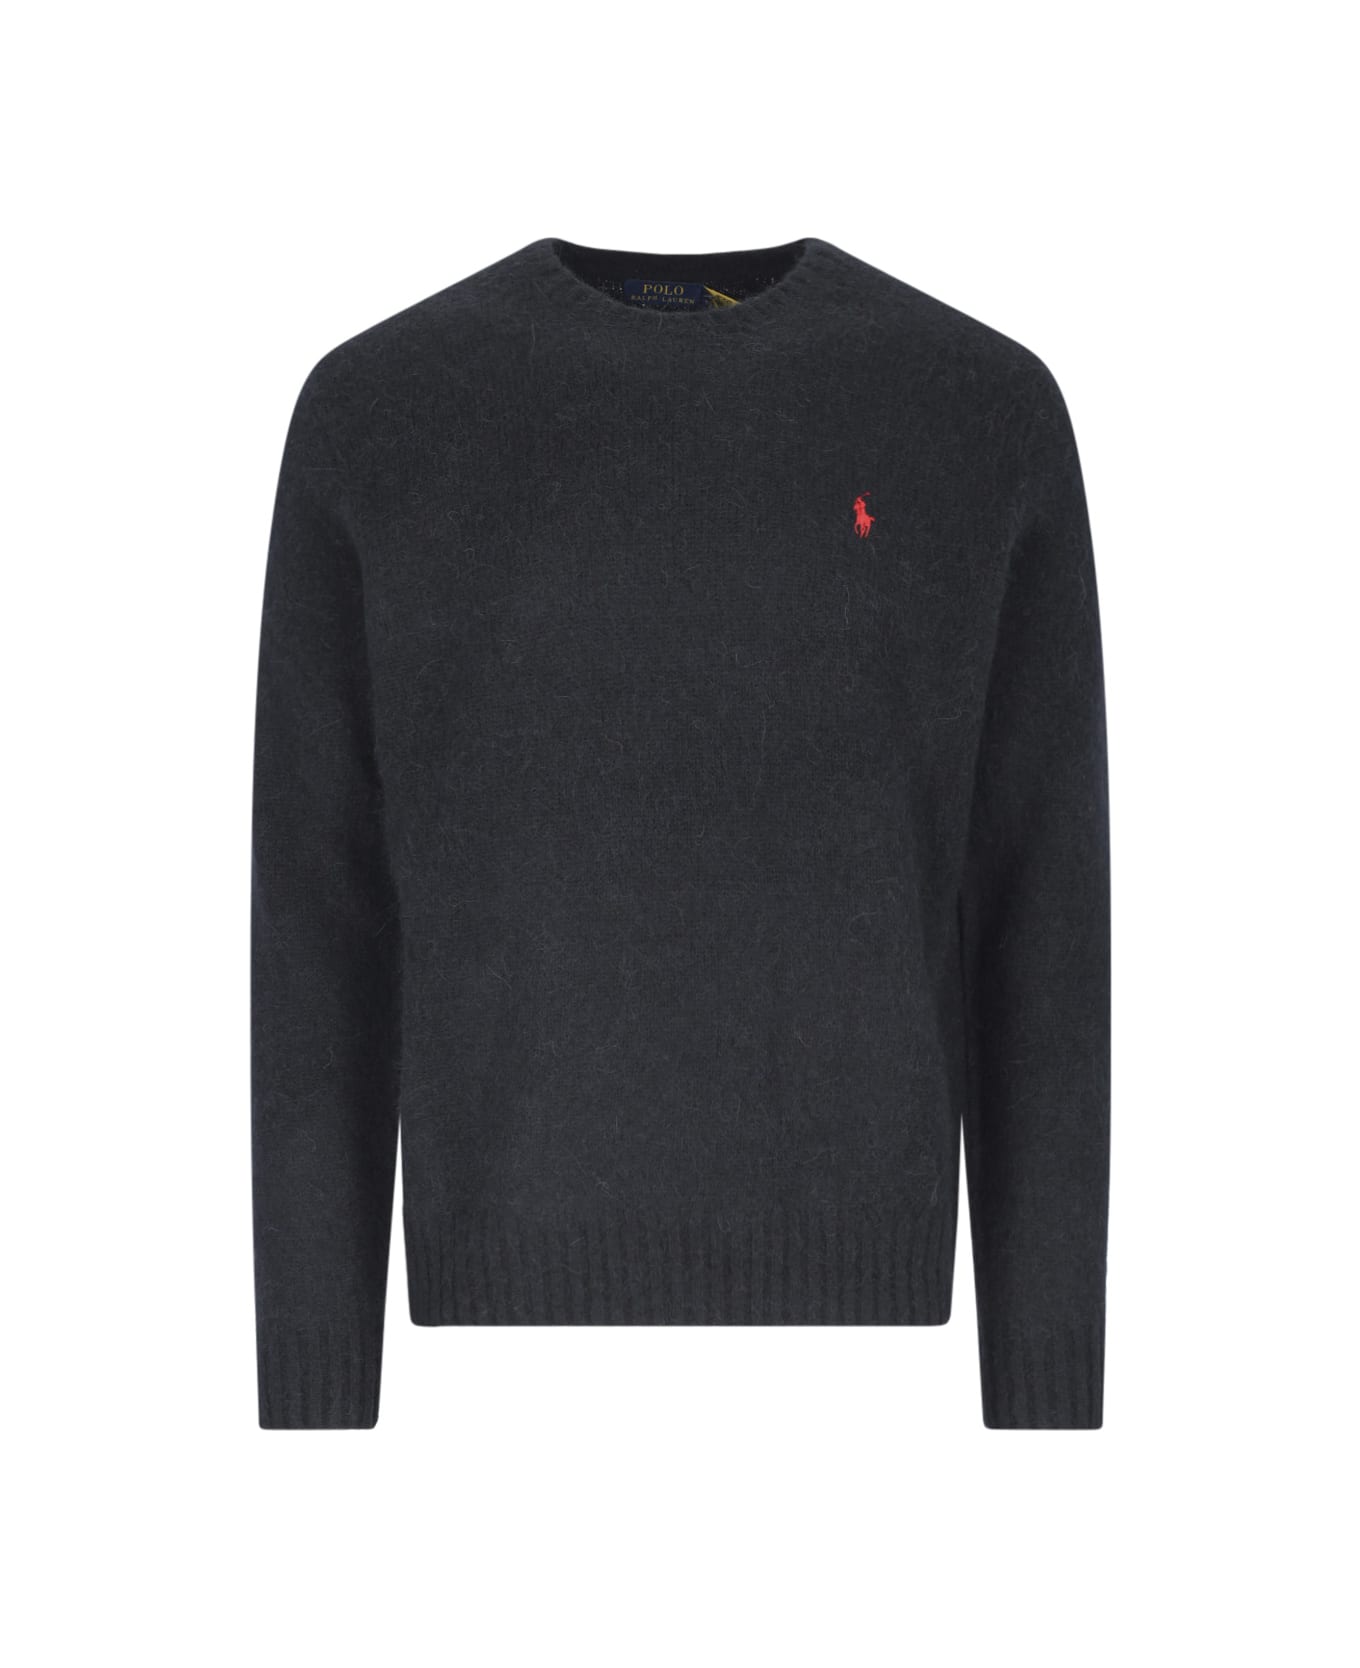 Polo Ralph Lauren Logo Crew Neck Sweater - Black  